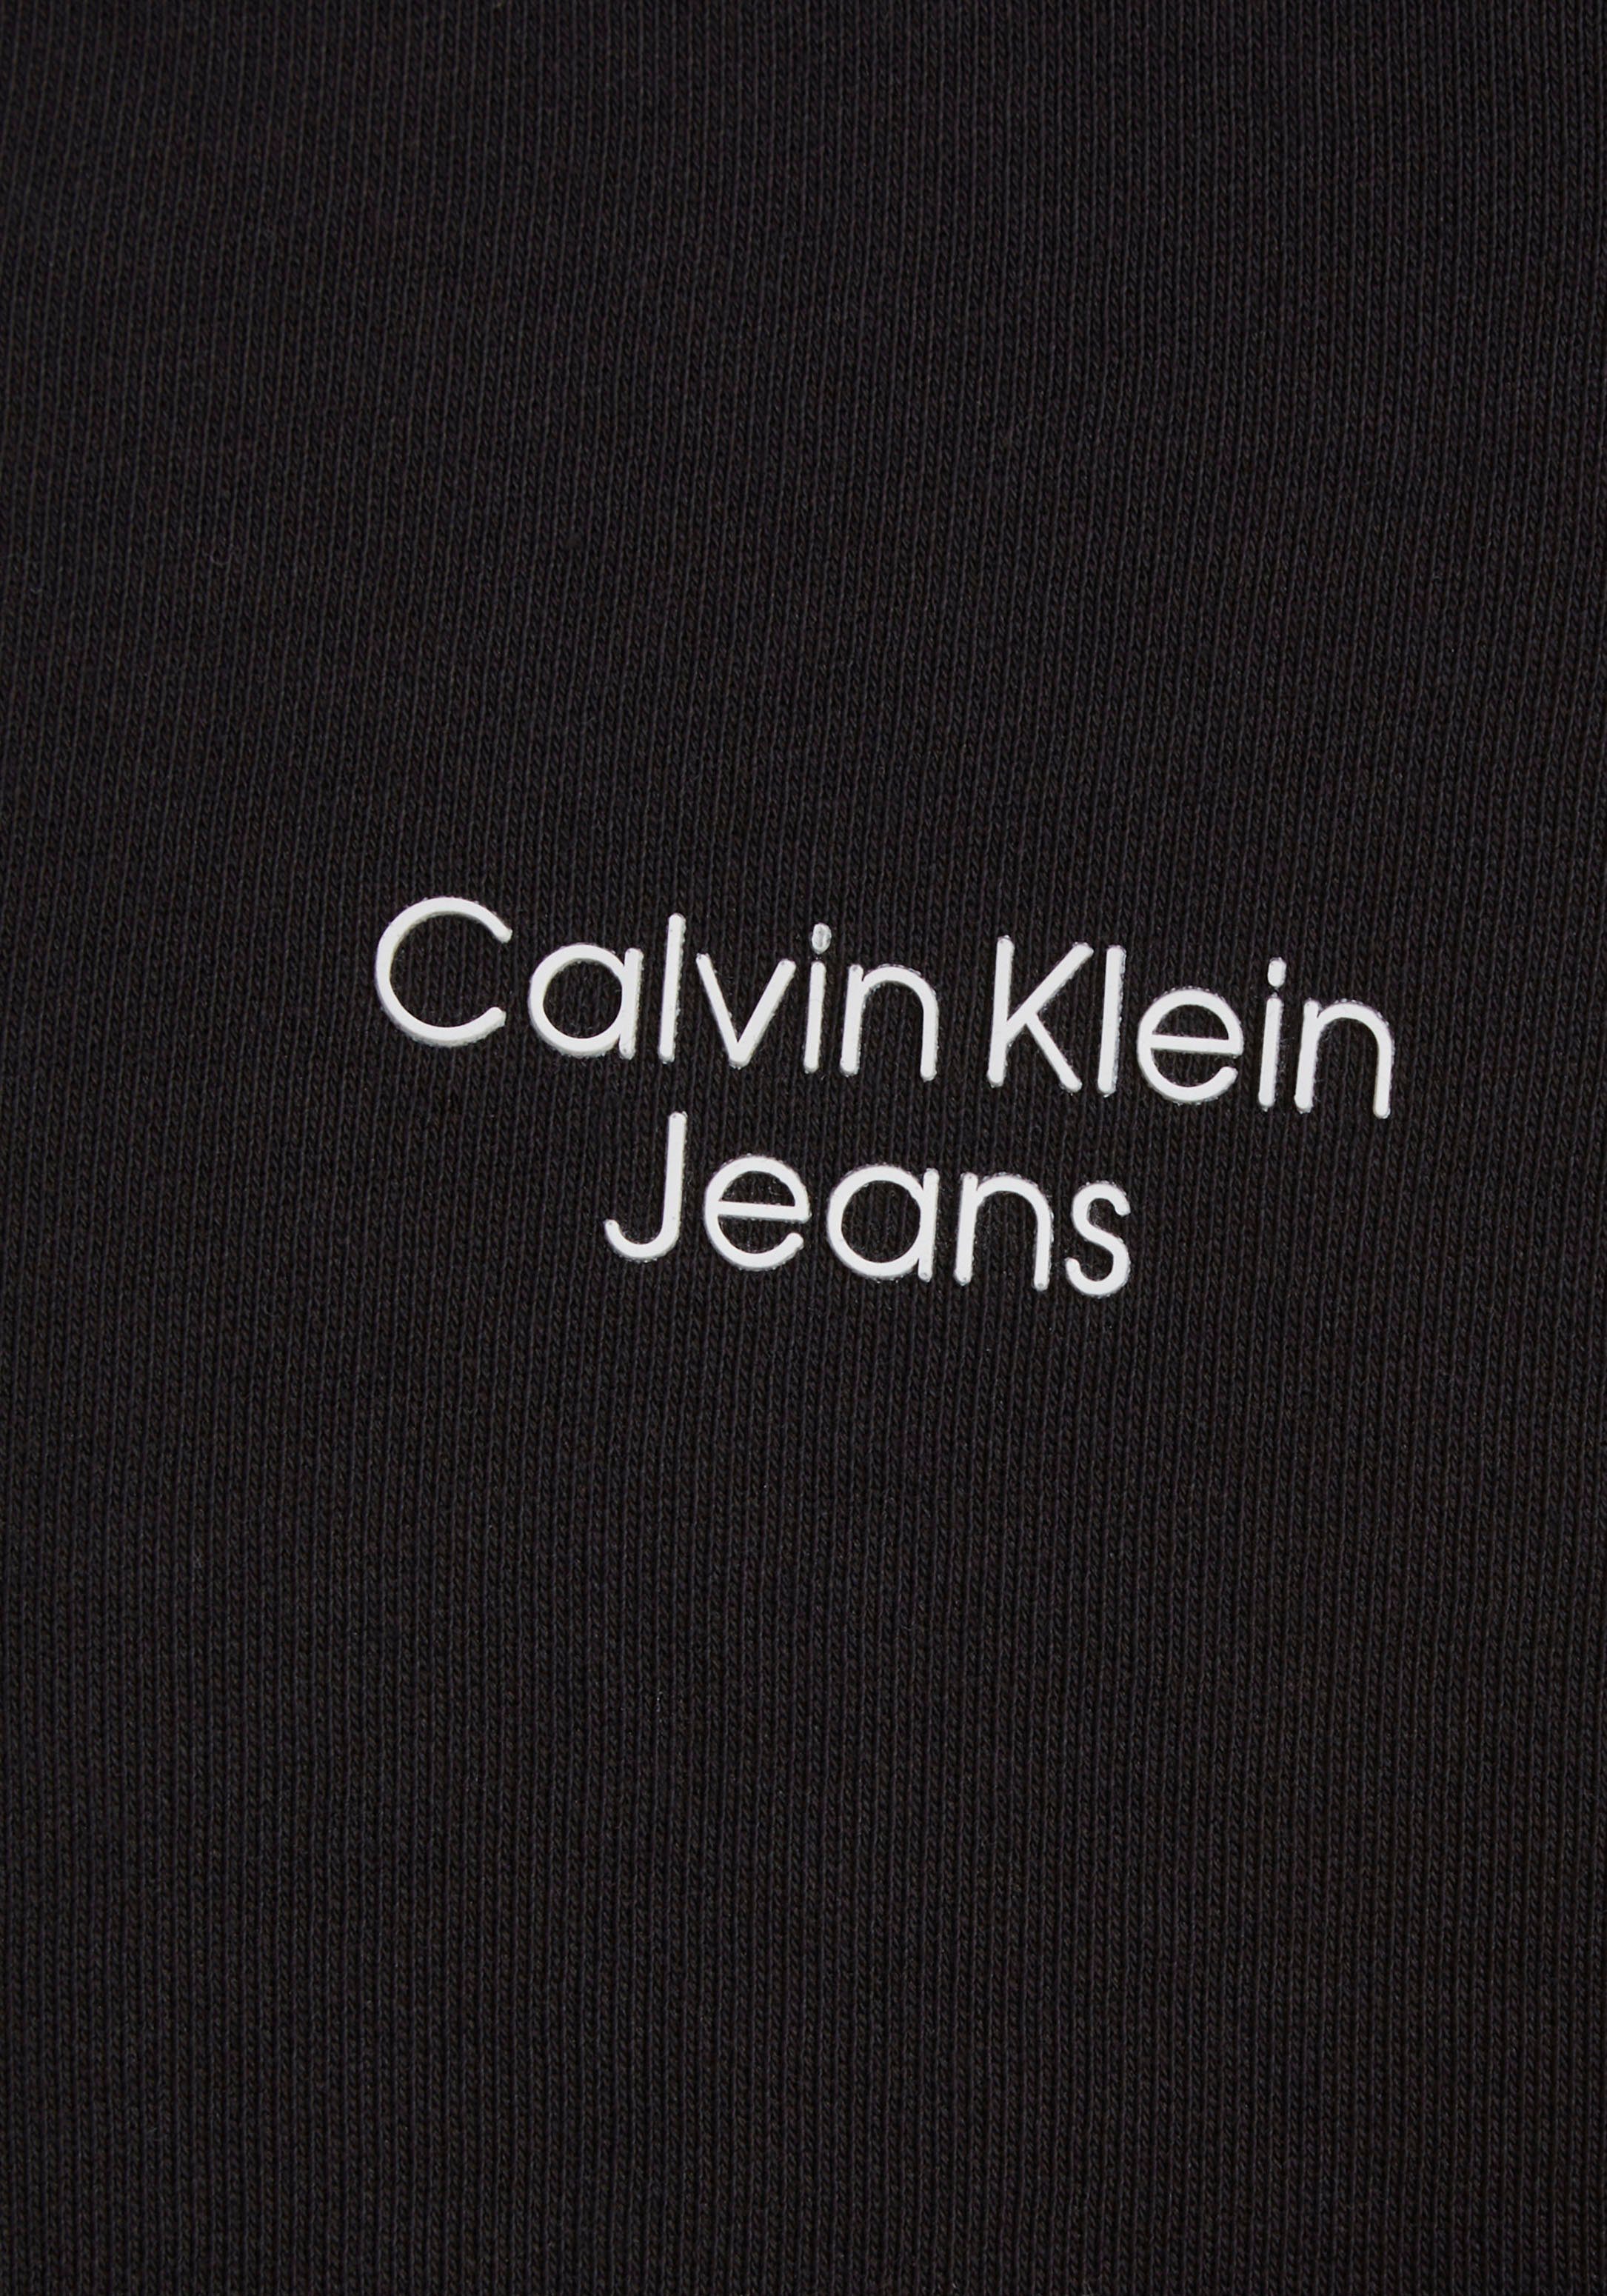 SWEATSHIRT STACK Klein Jeans Sweatshirt CKJ LOGO Calvin